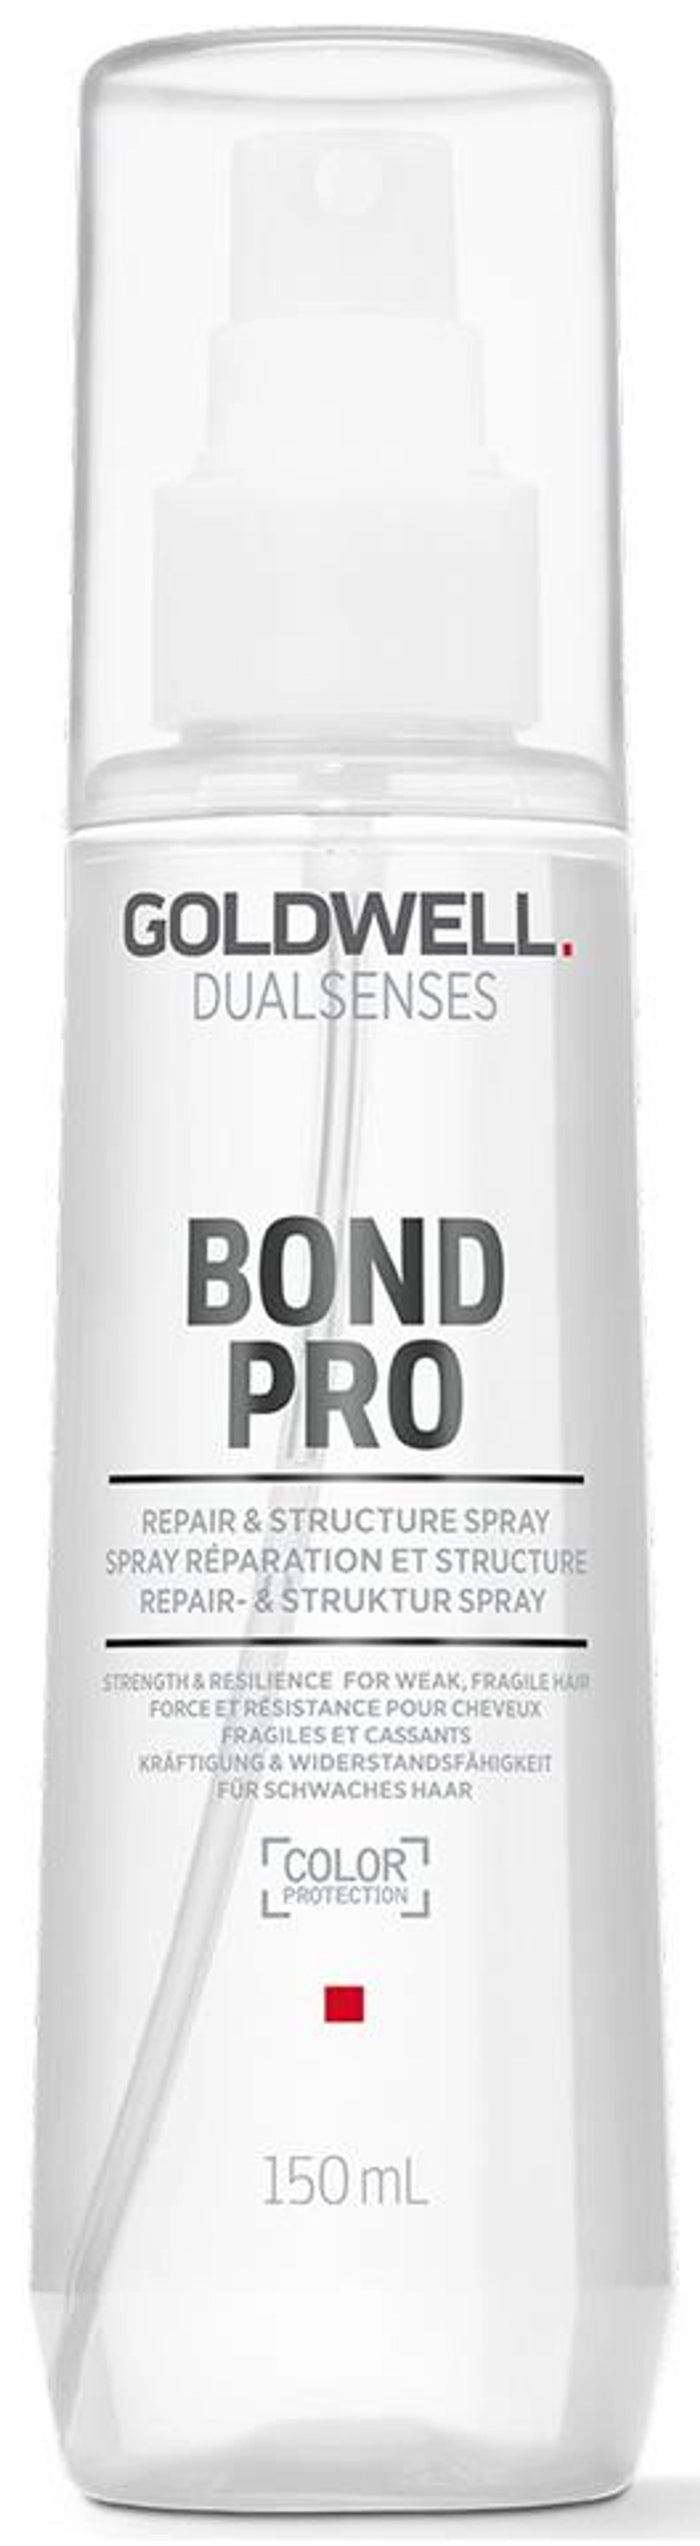 Goldwell Bond Pro Repair & Structure Spray